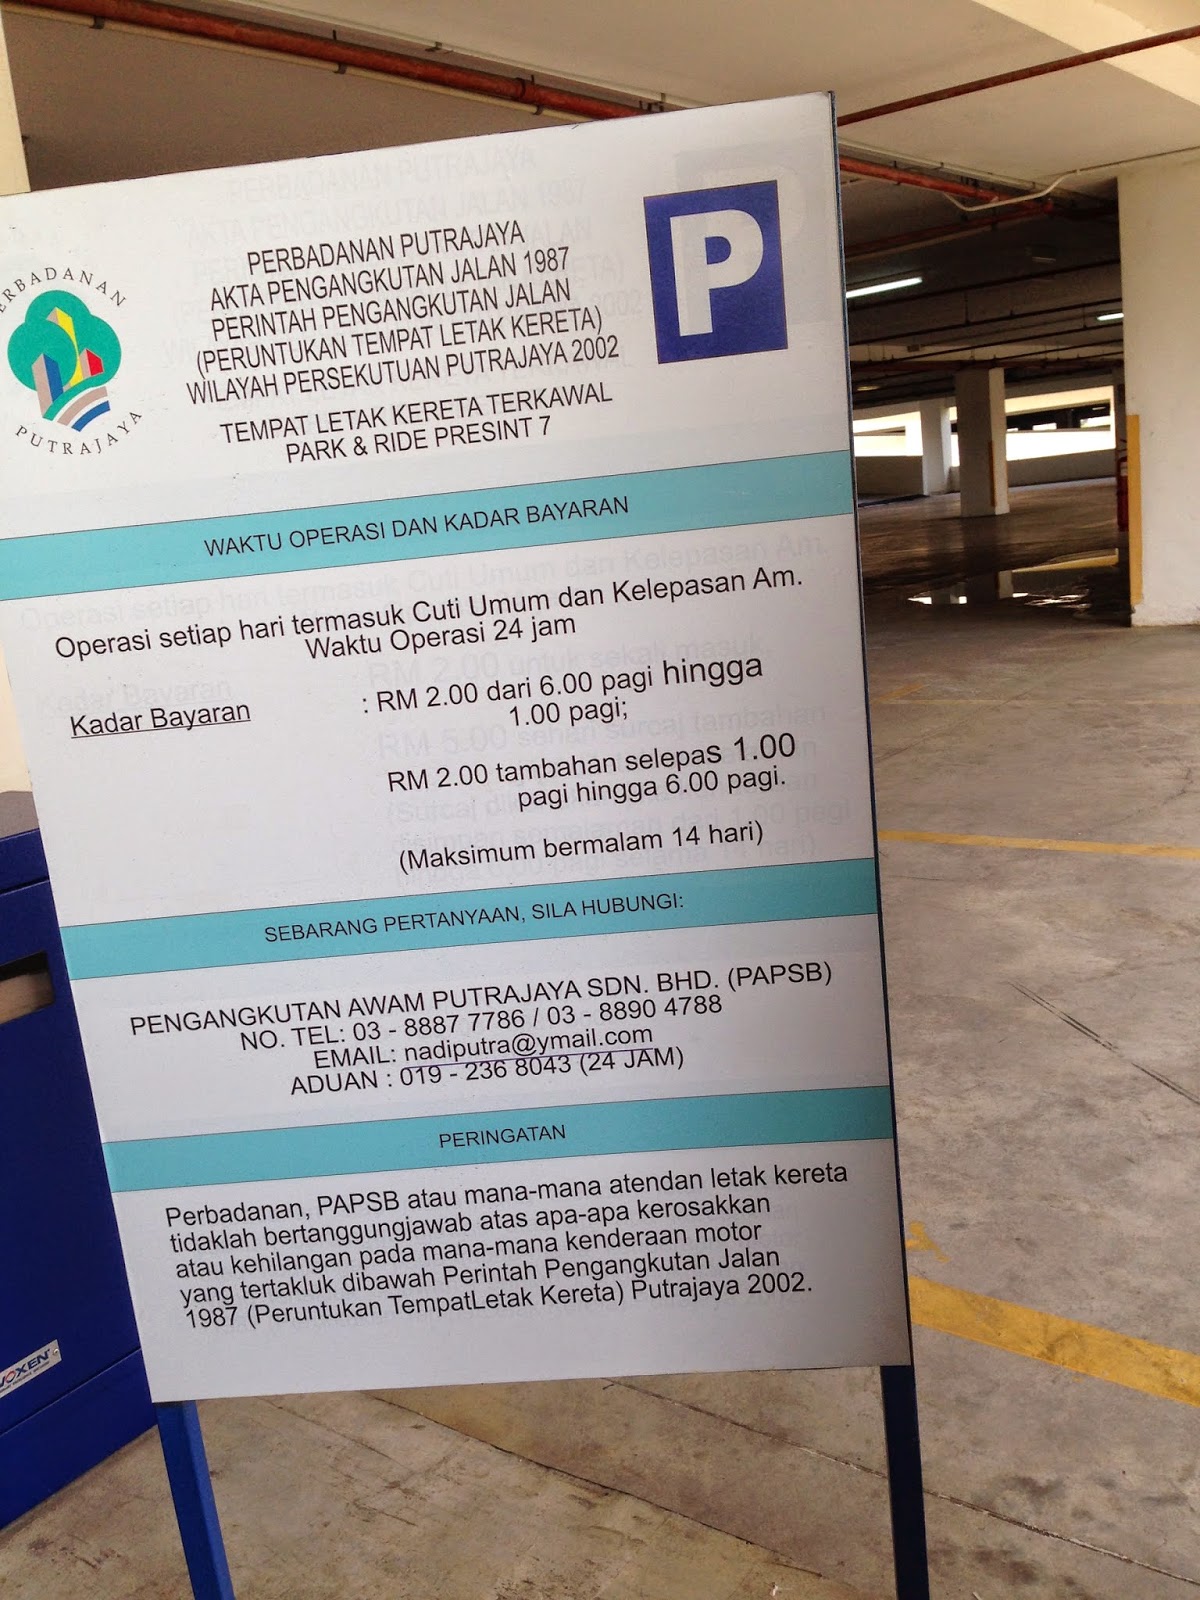 klia2 parking rate 2019